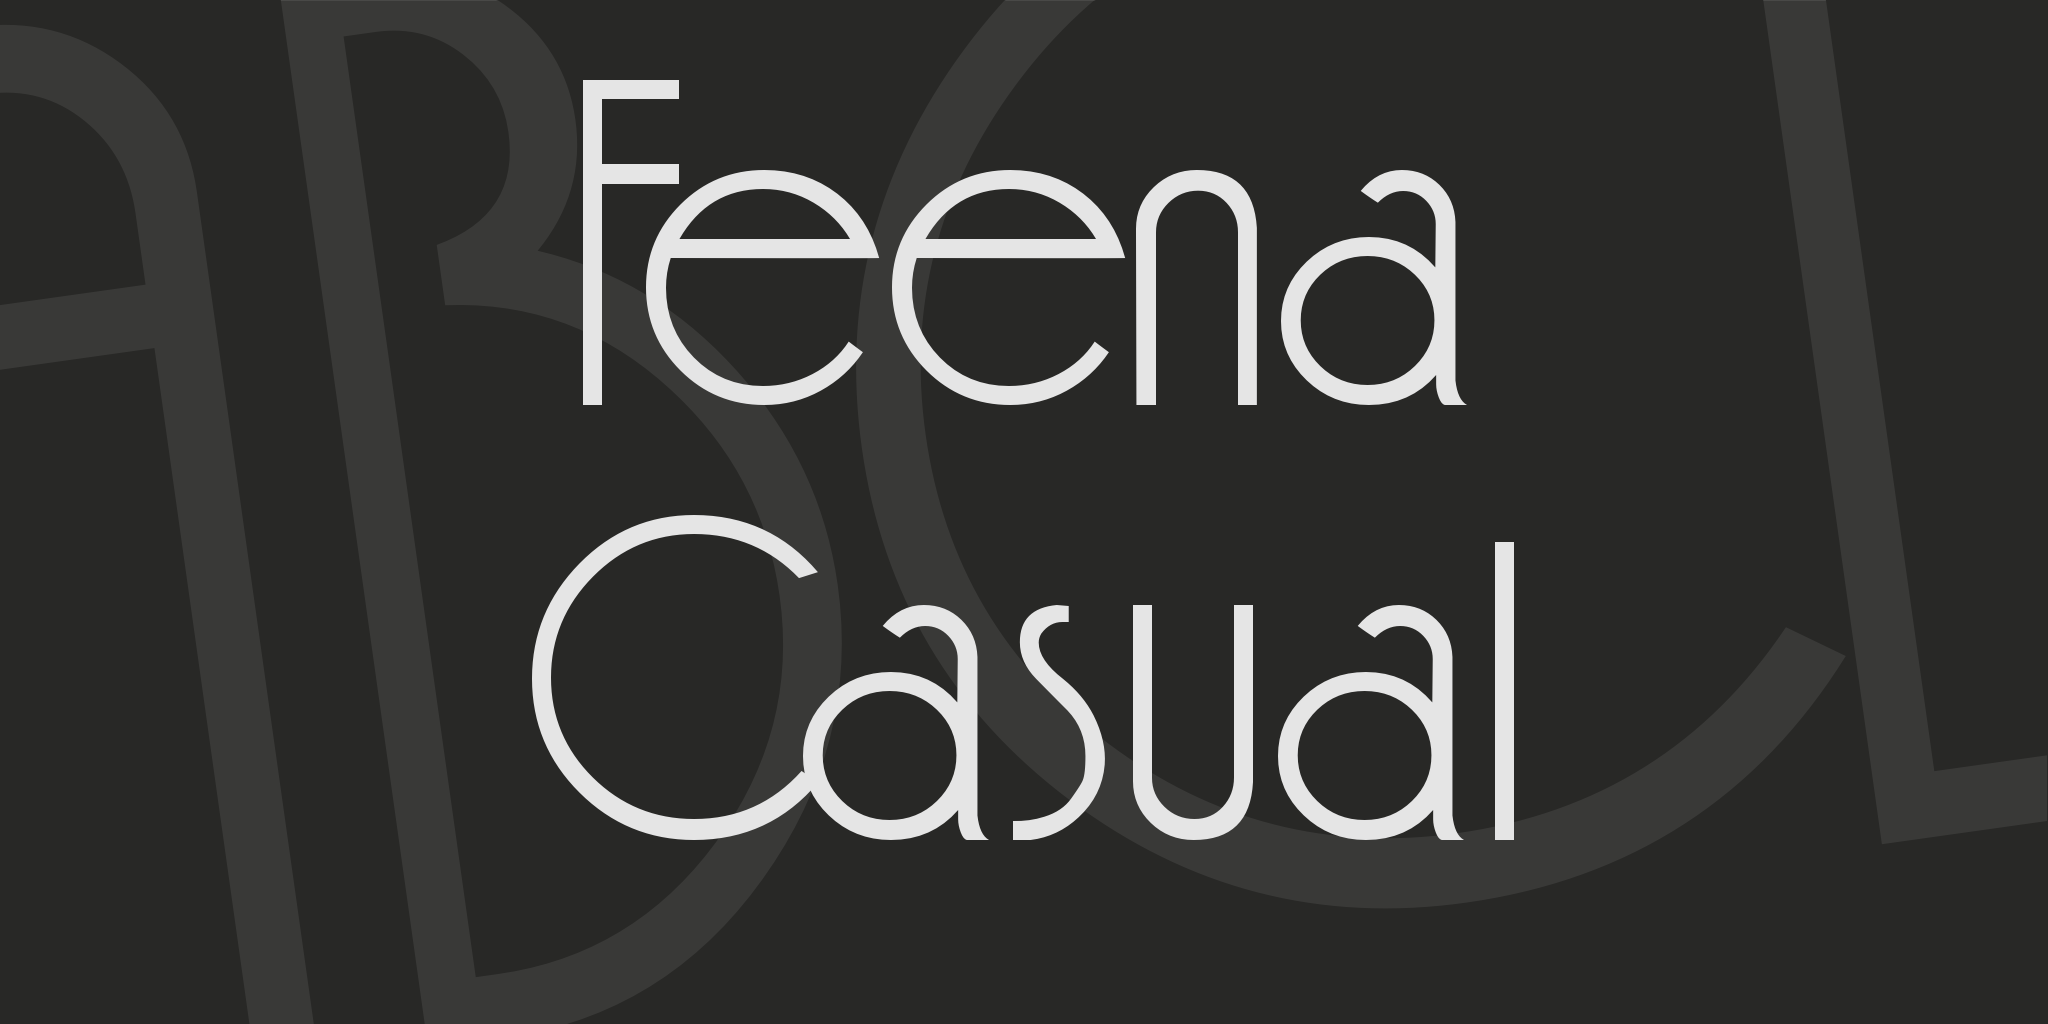 Feena Casual